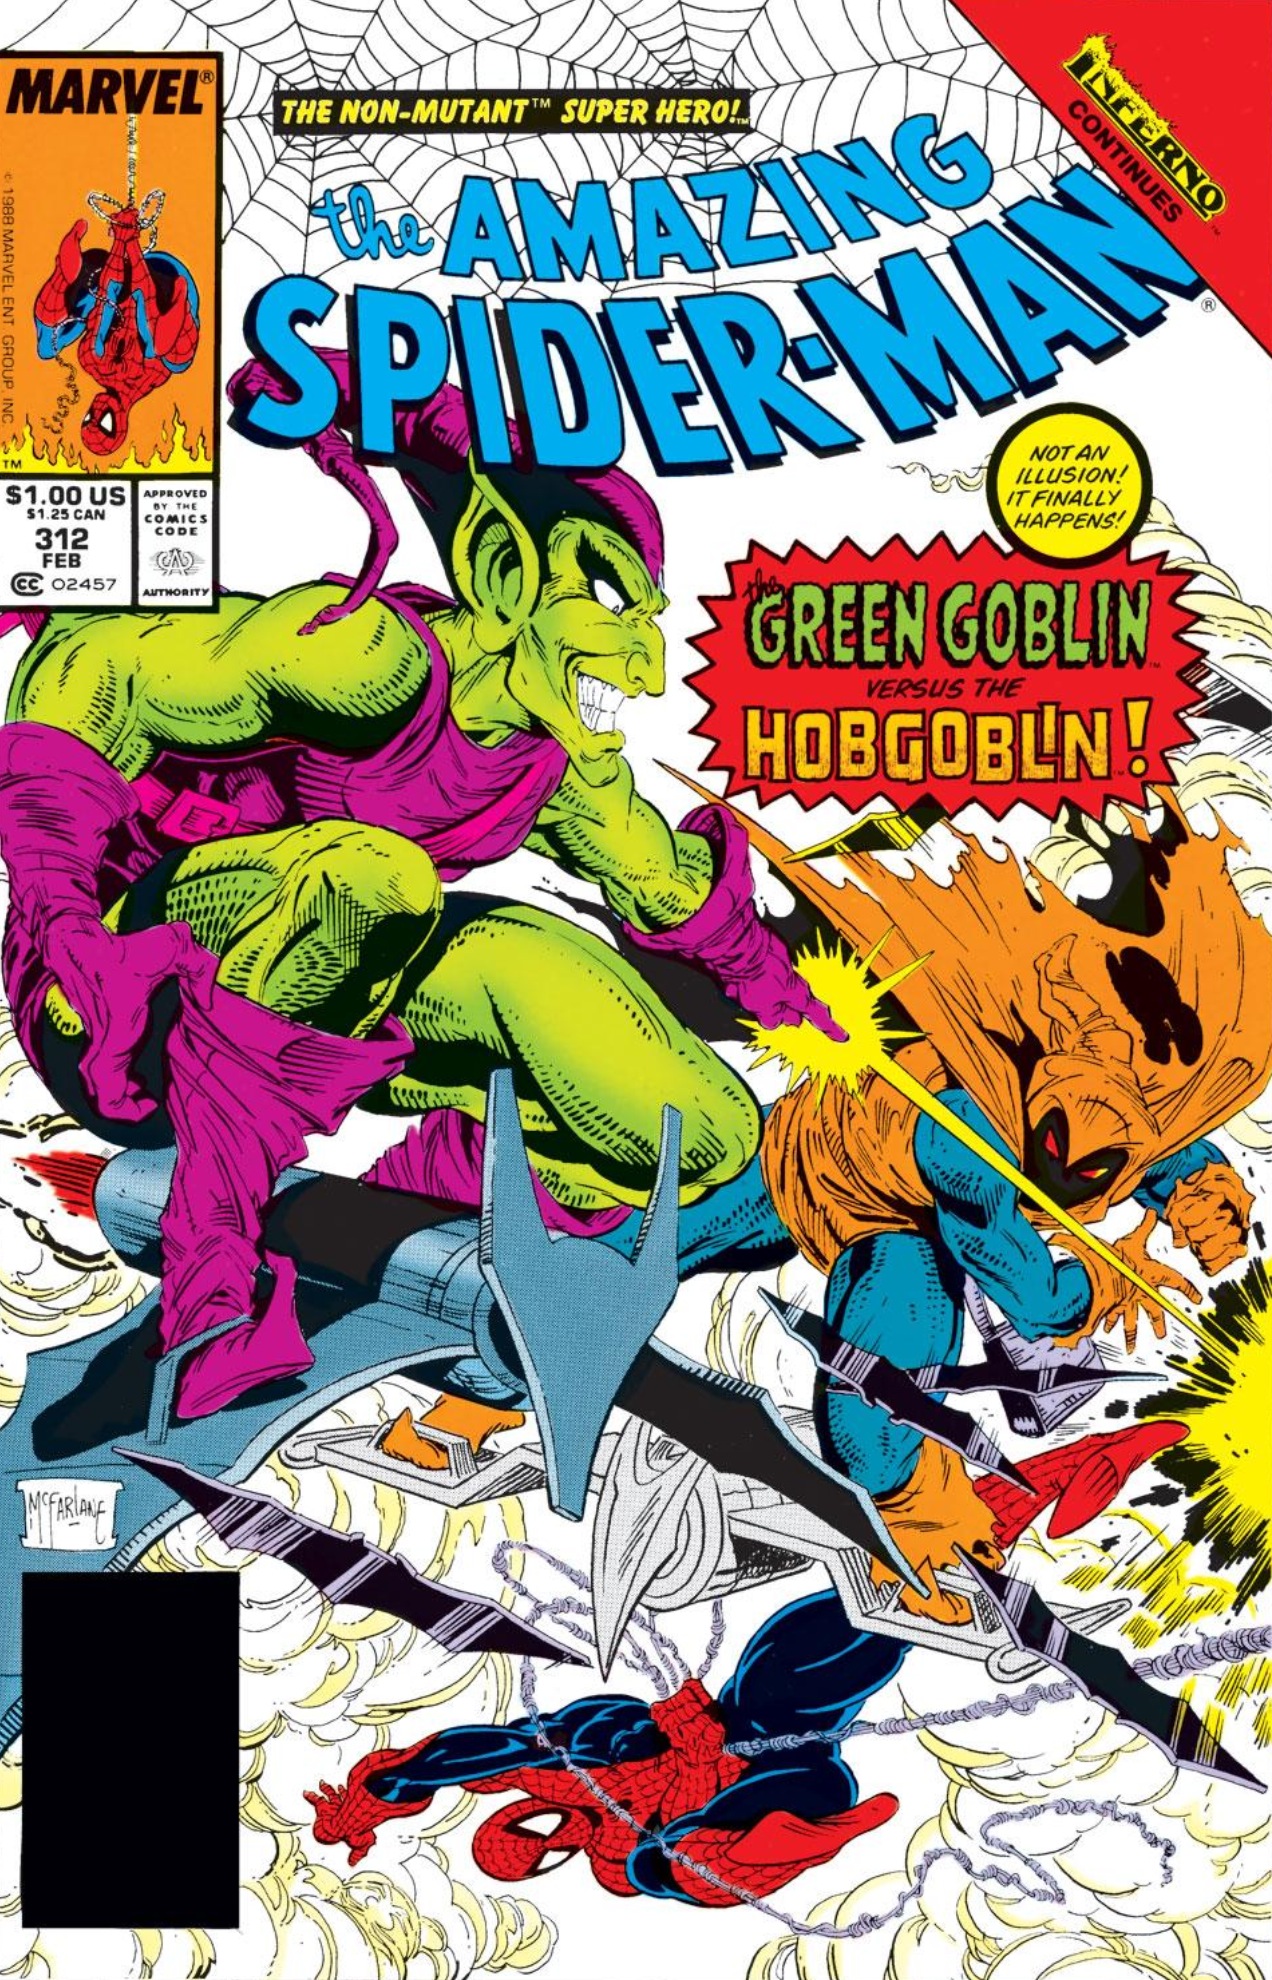 Amazing Spider-Man #312: It's a Substitute Goblin War!